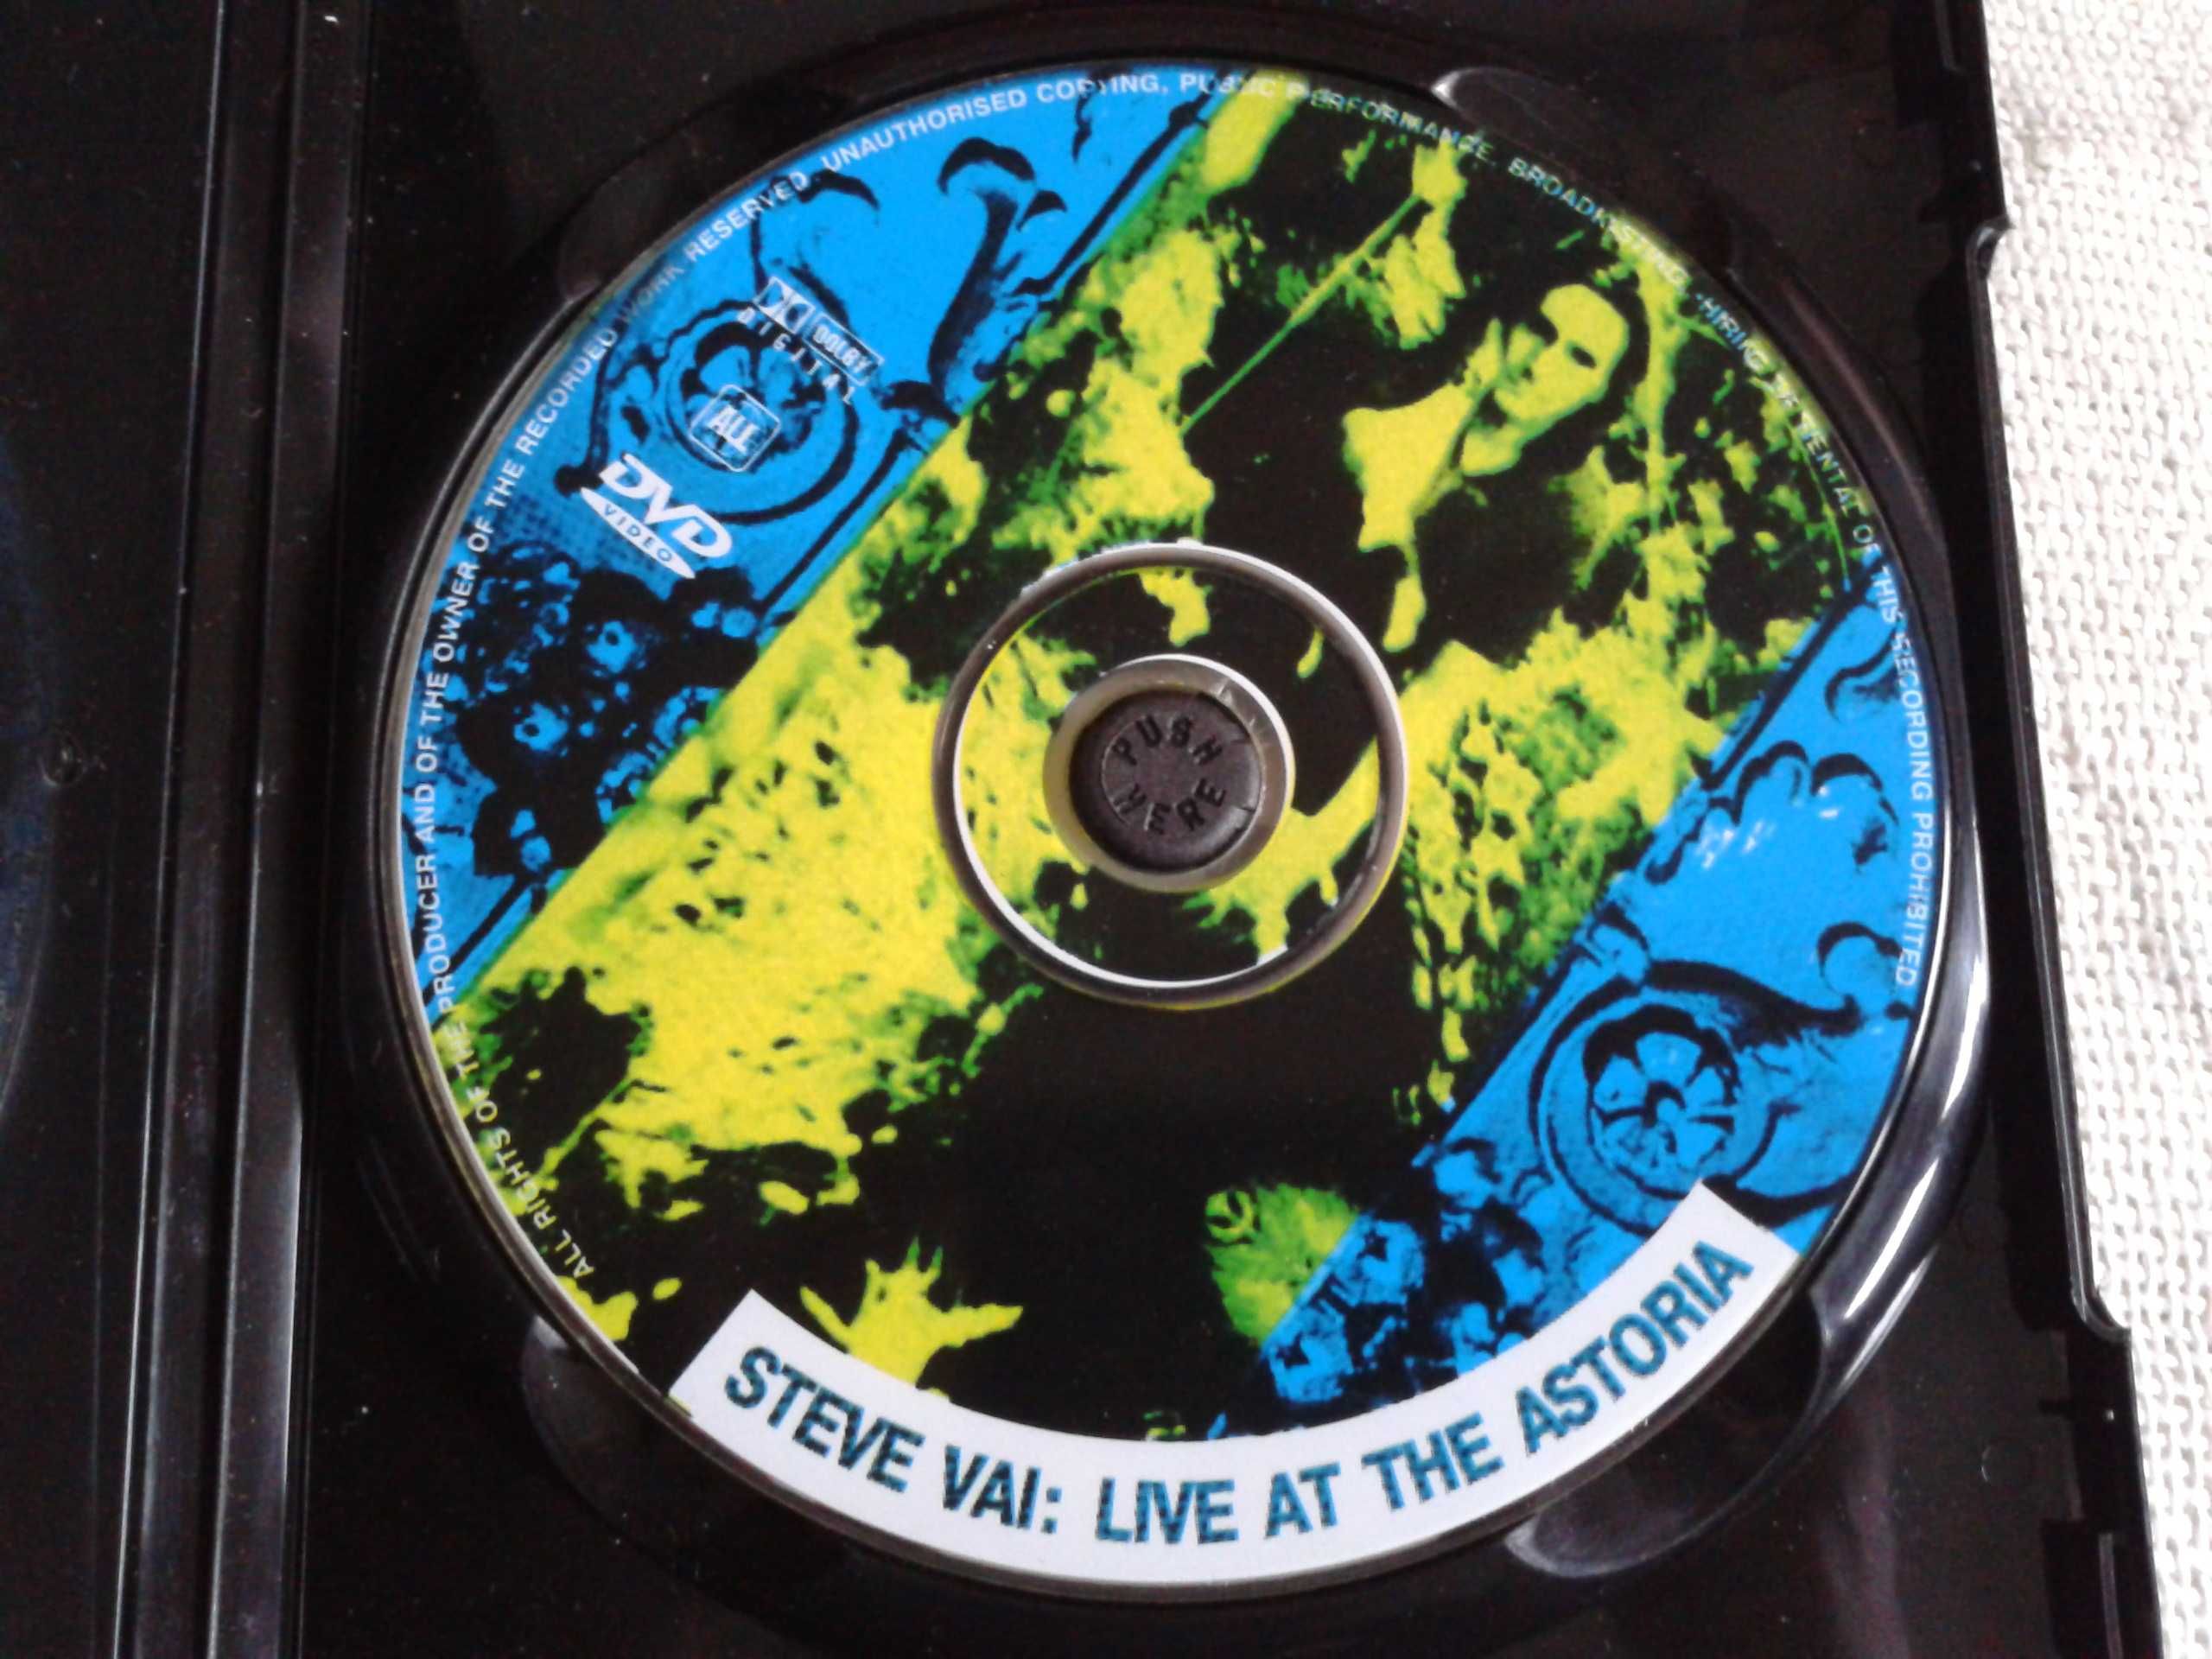 Steve Vai - Live At The Astoria, London  DVD